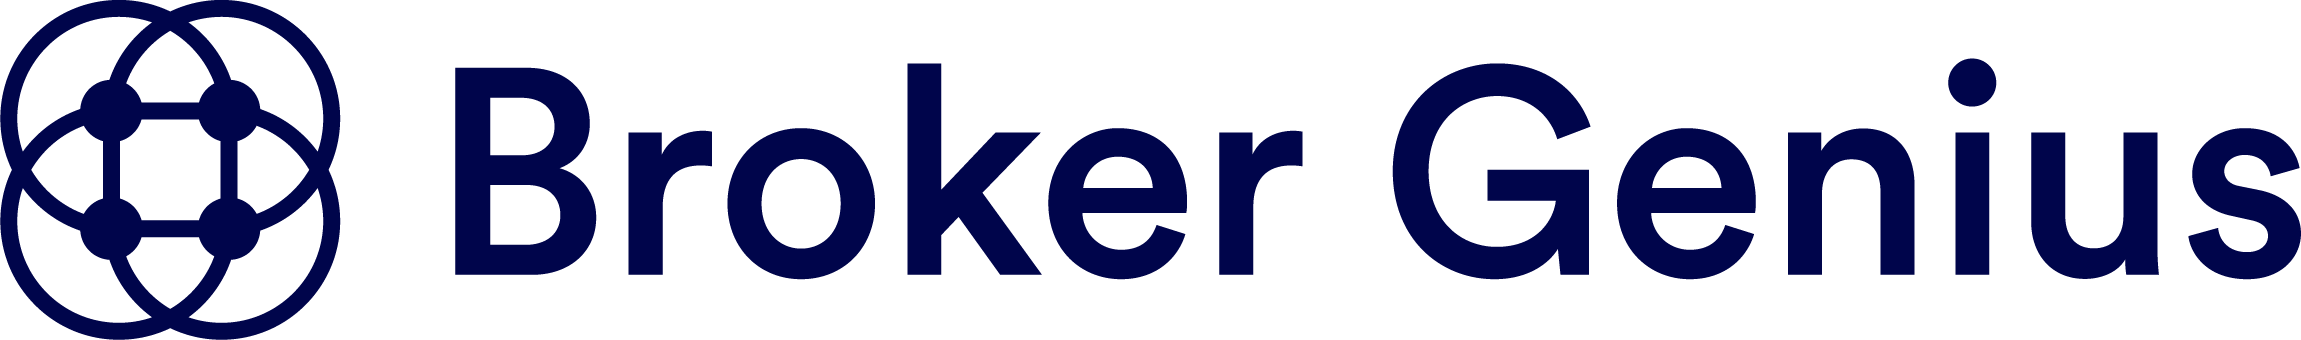 Broker Genius logo